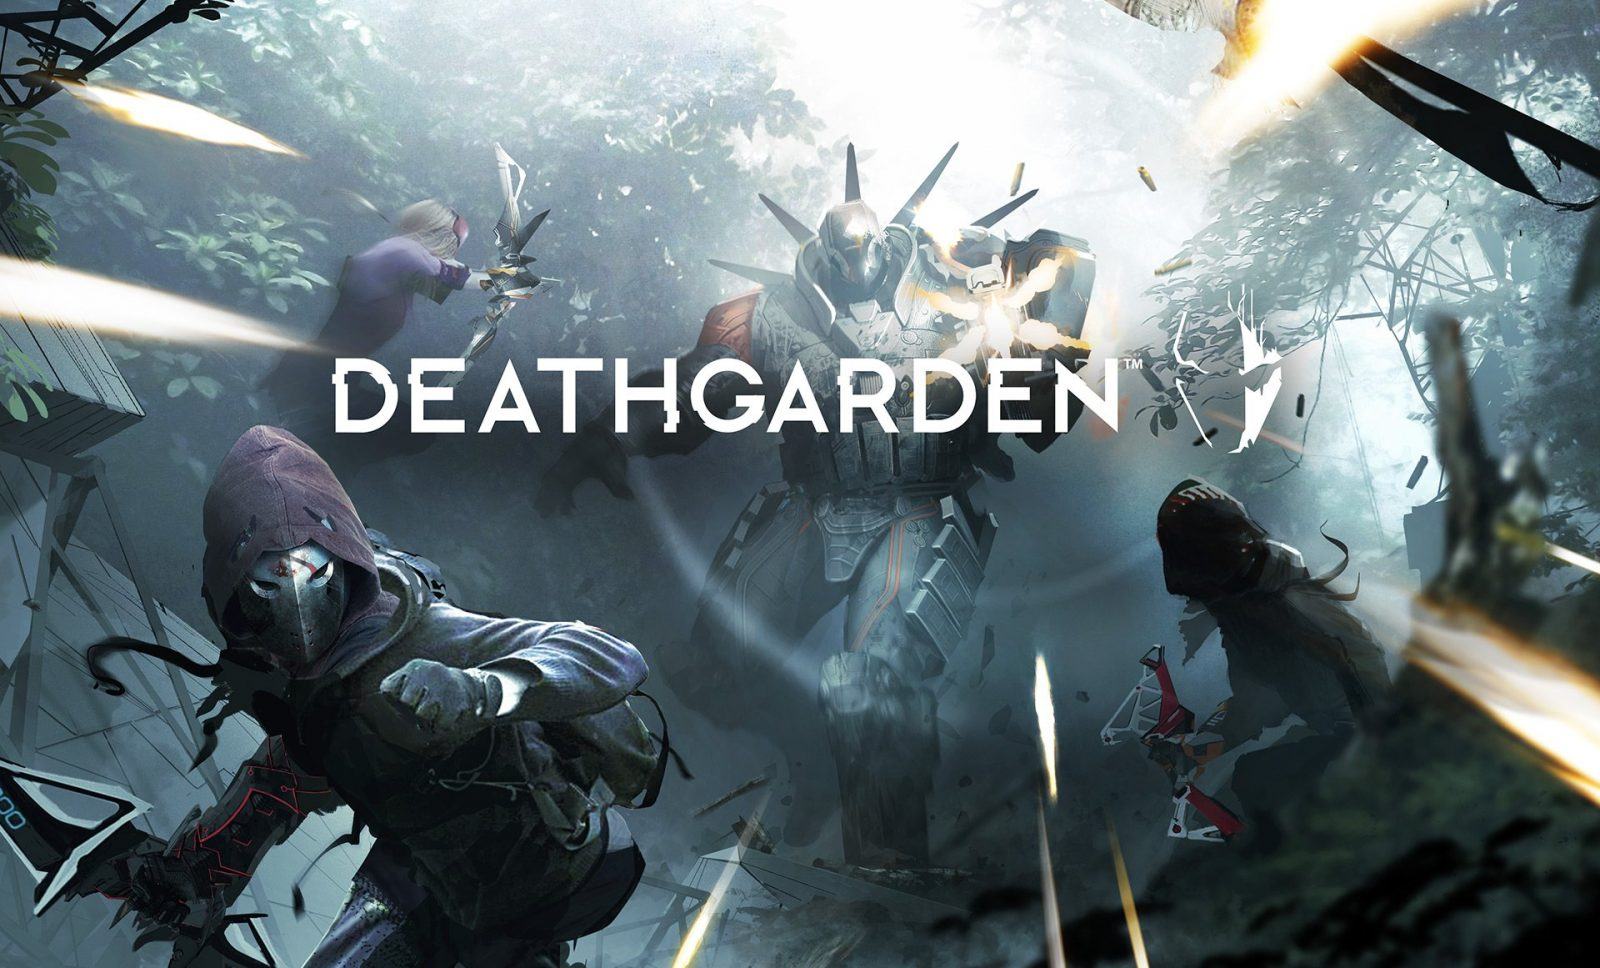 Deathgarden release